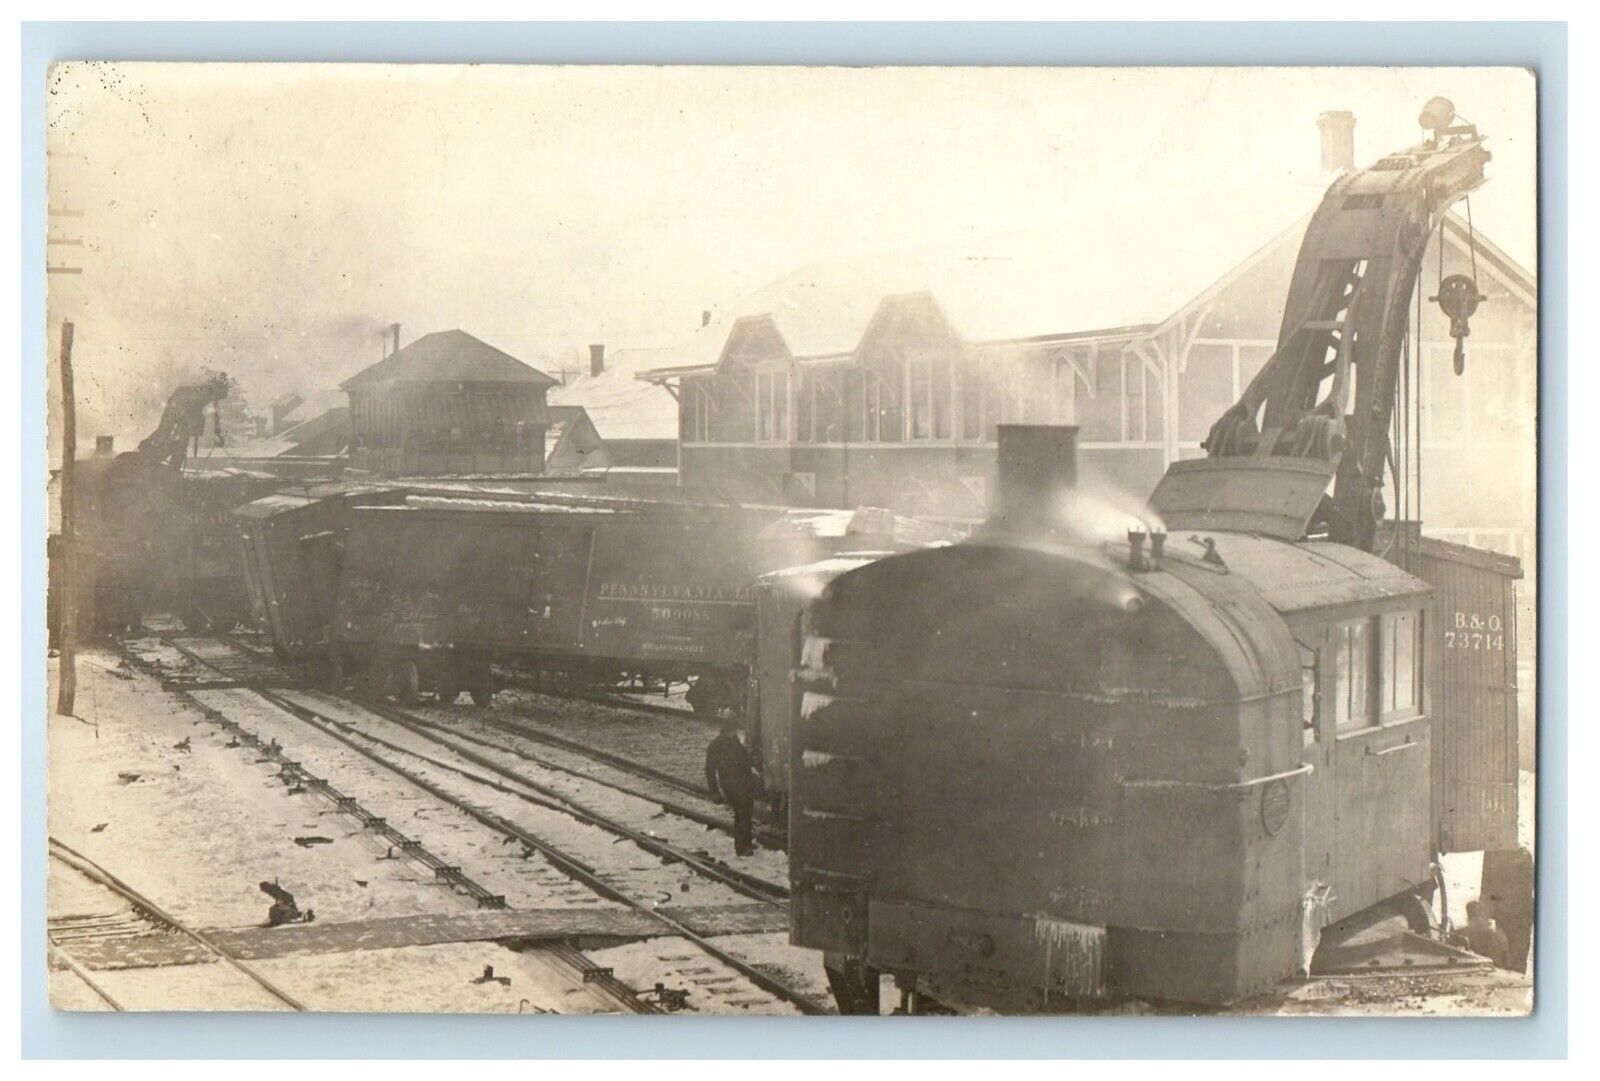 March 1913 B&0 Railroad Locomotive Crash Crane Train RPPC Photo Postcard